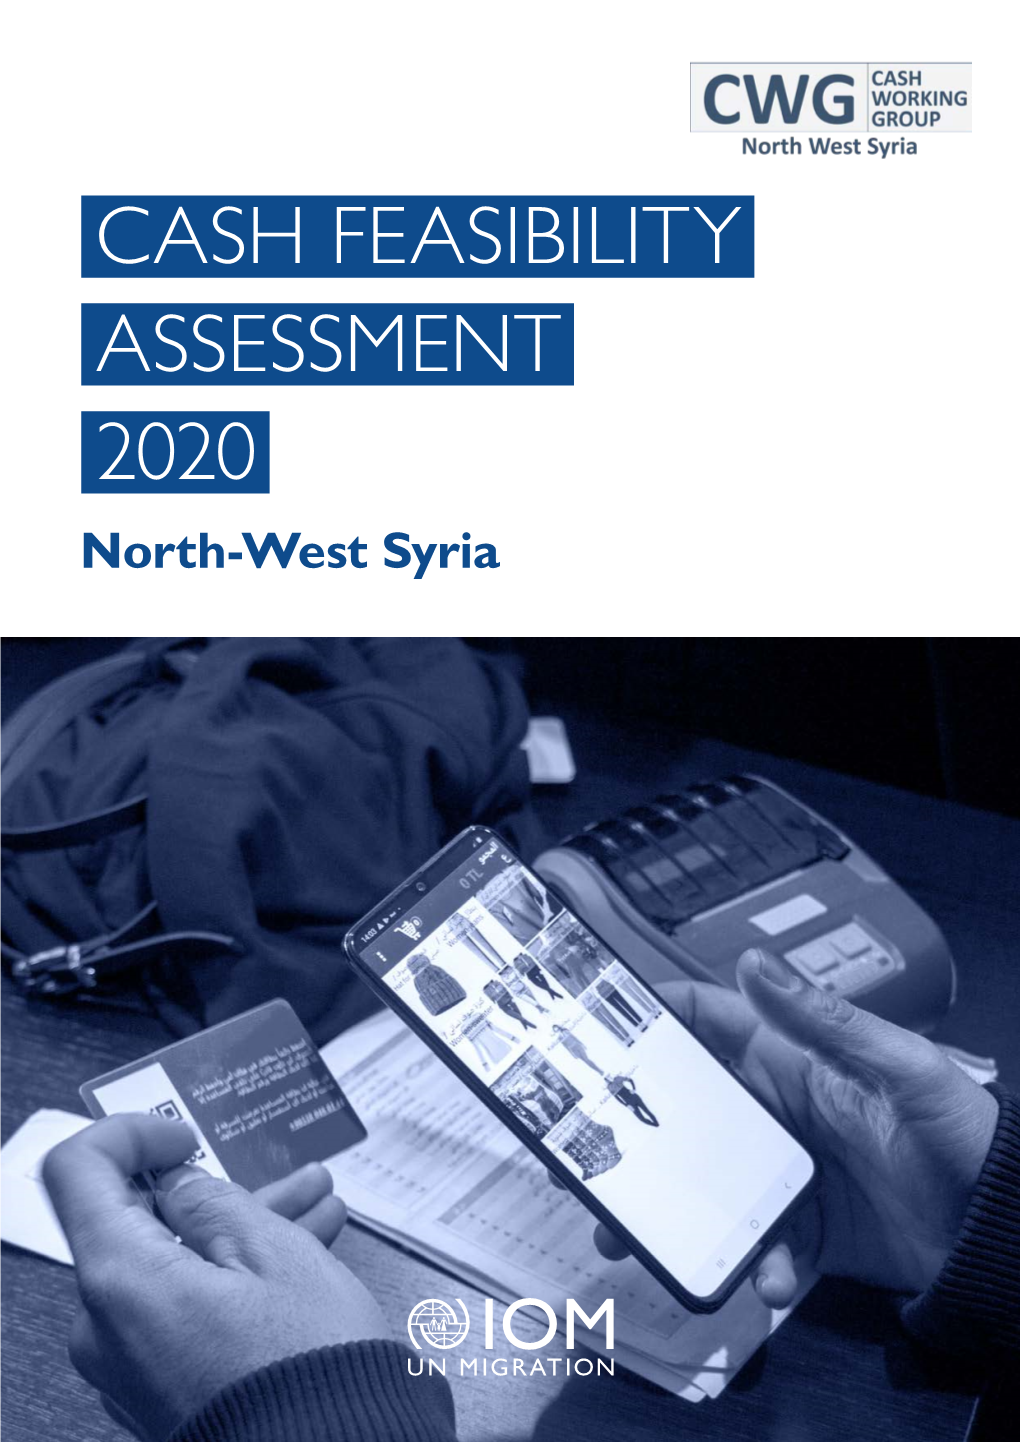 Cash Feasibility Assessment 2020